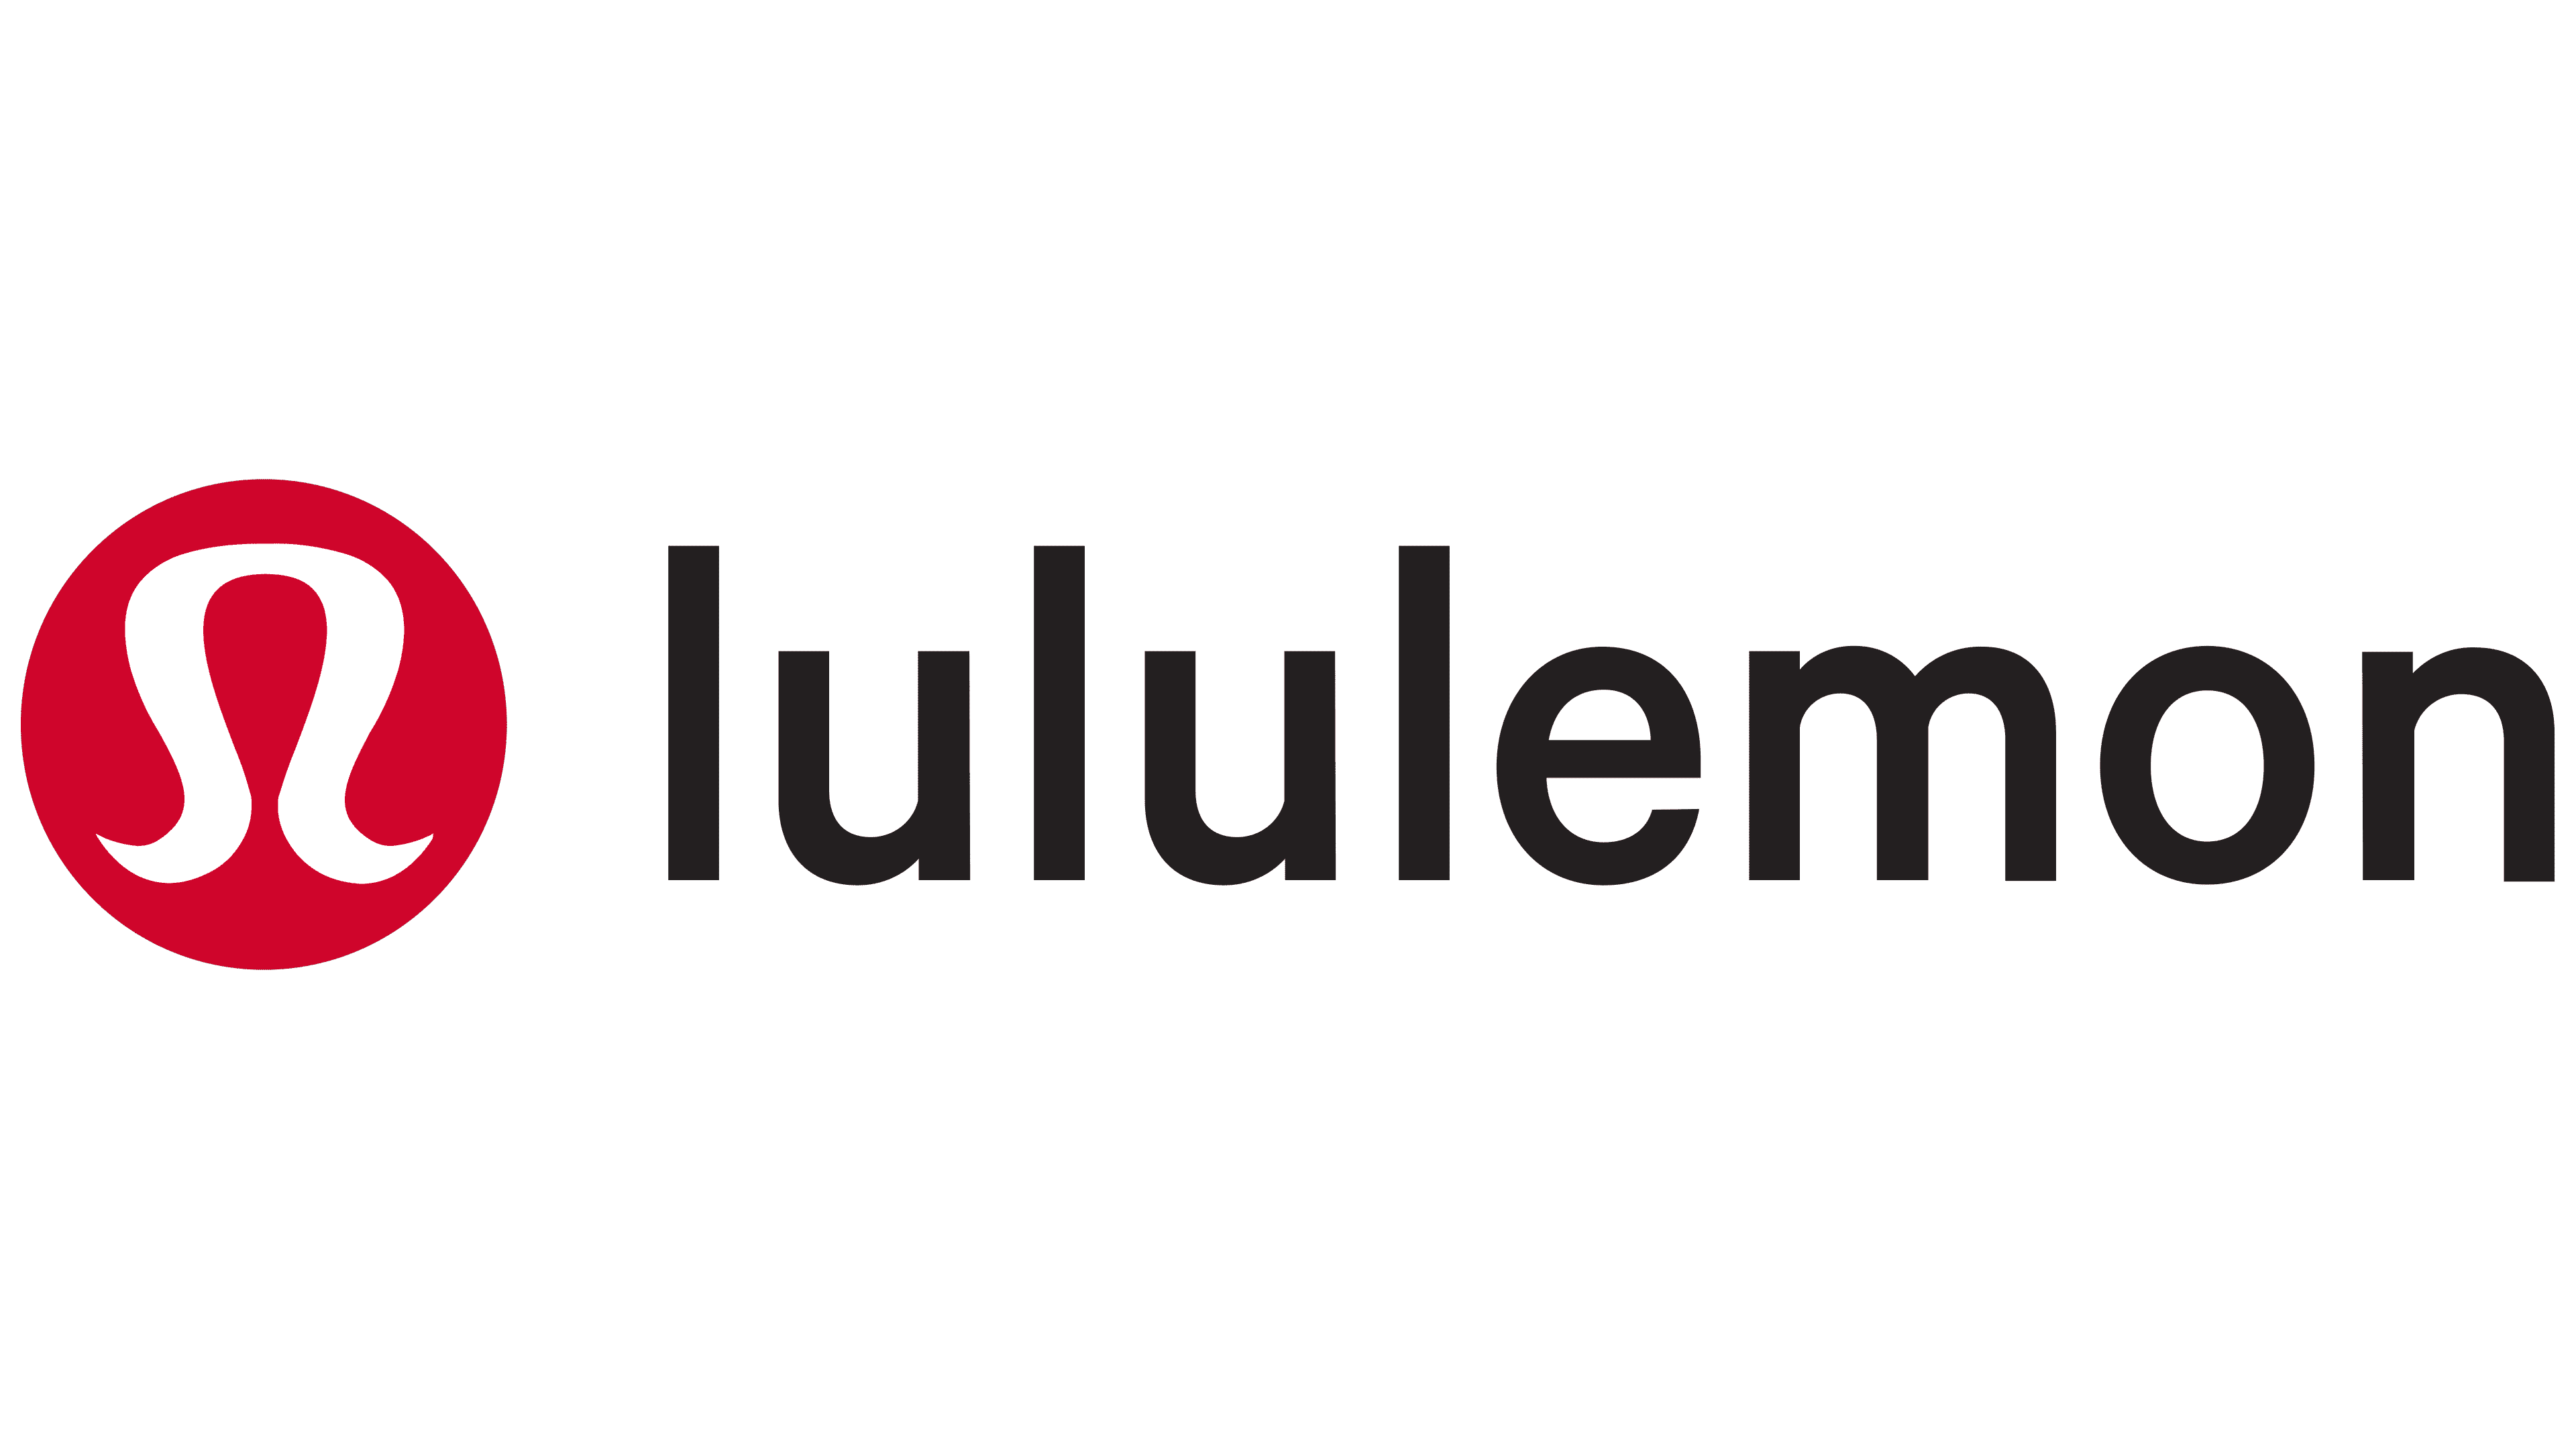 Lululemon Benefits From Sheer Pants